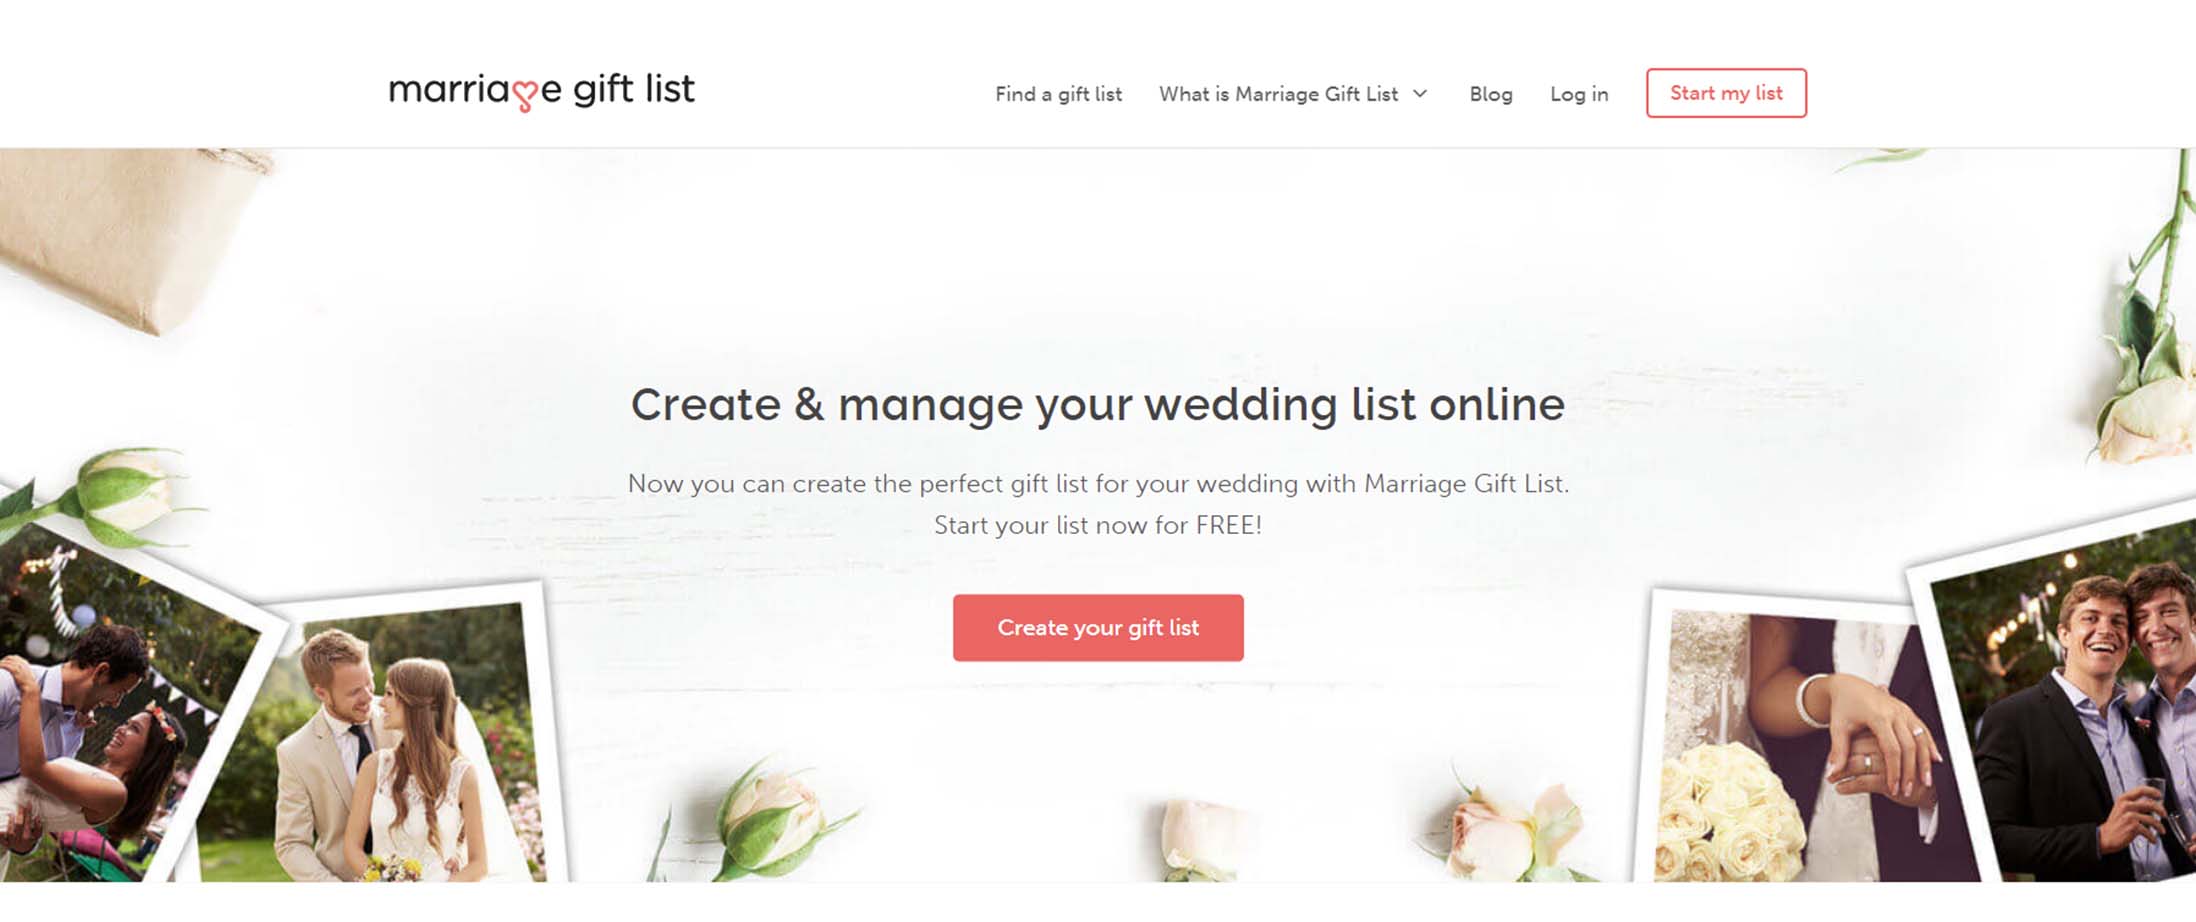 Wedding Gift Lists - MarriageGiftList